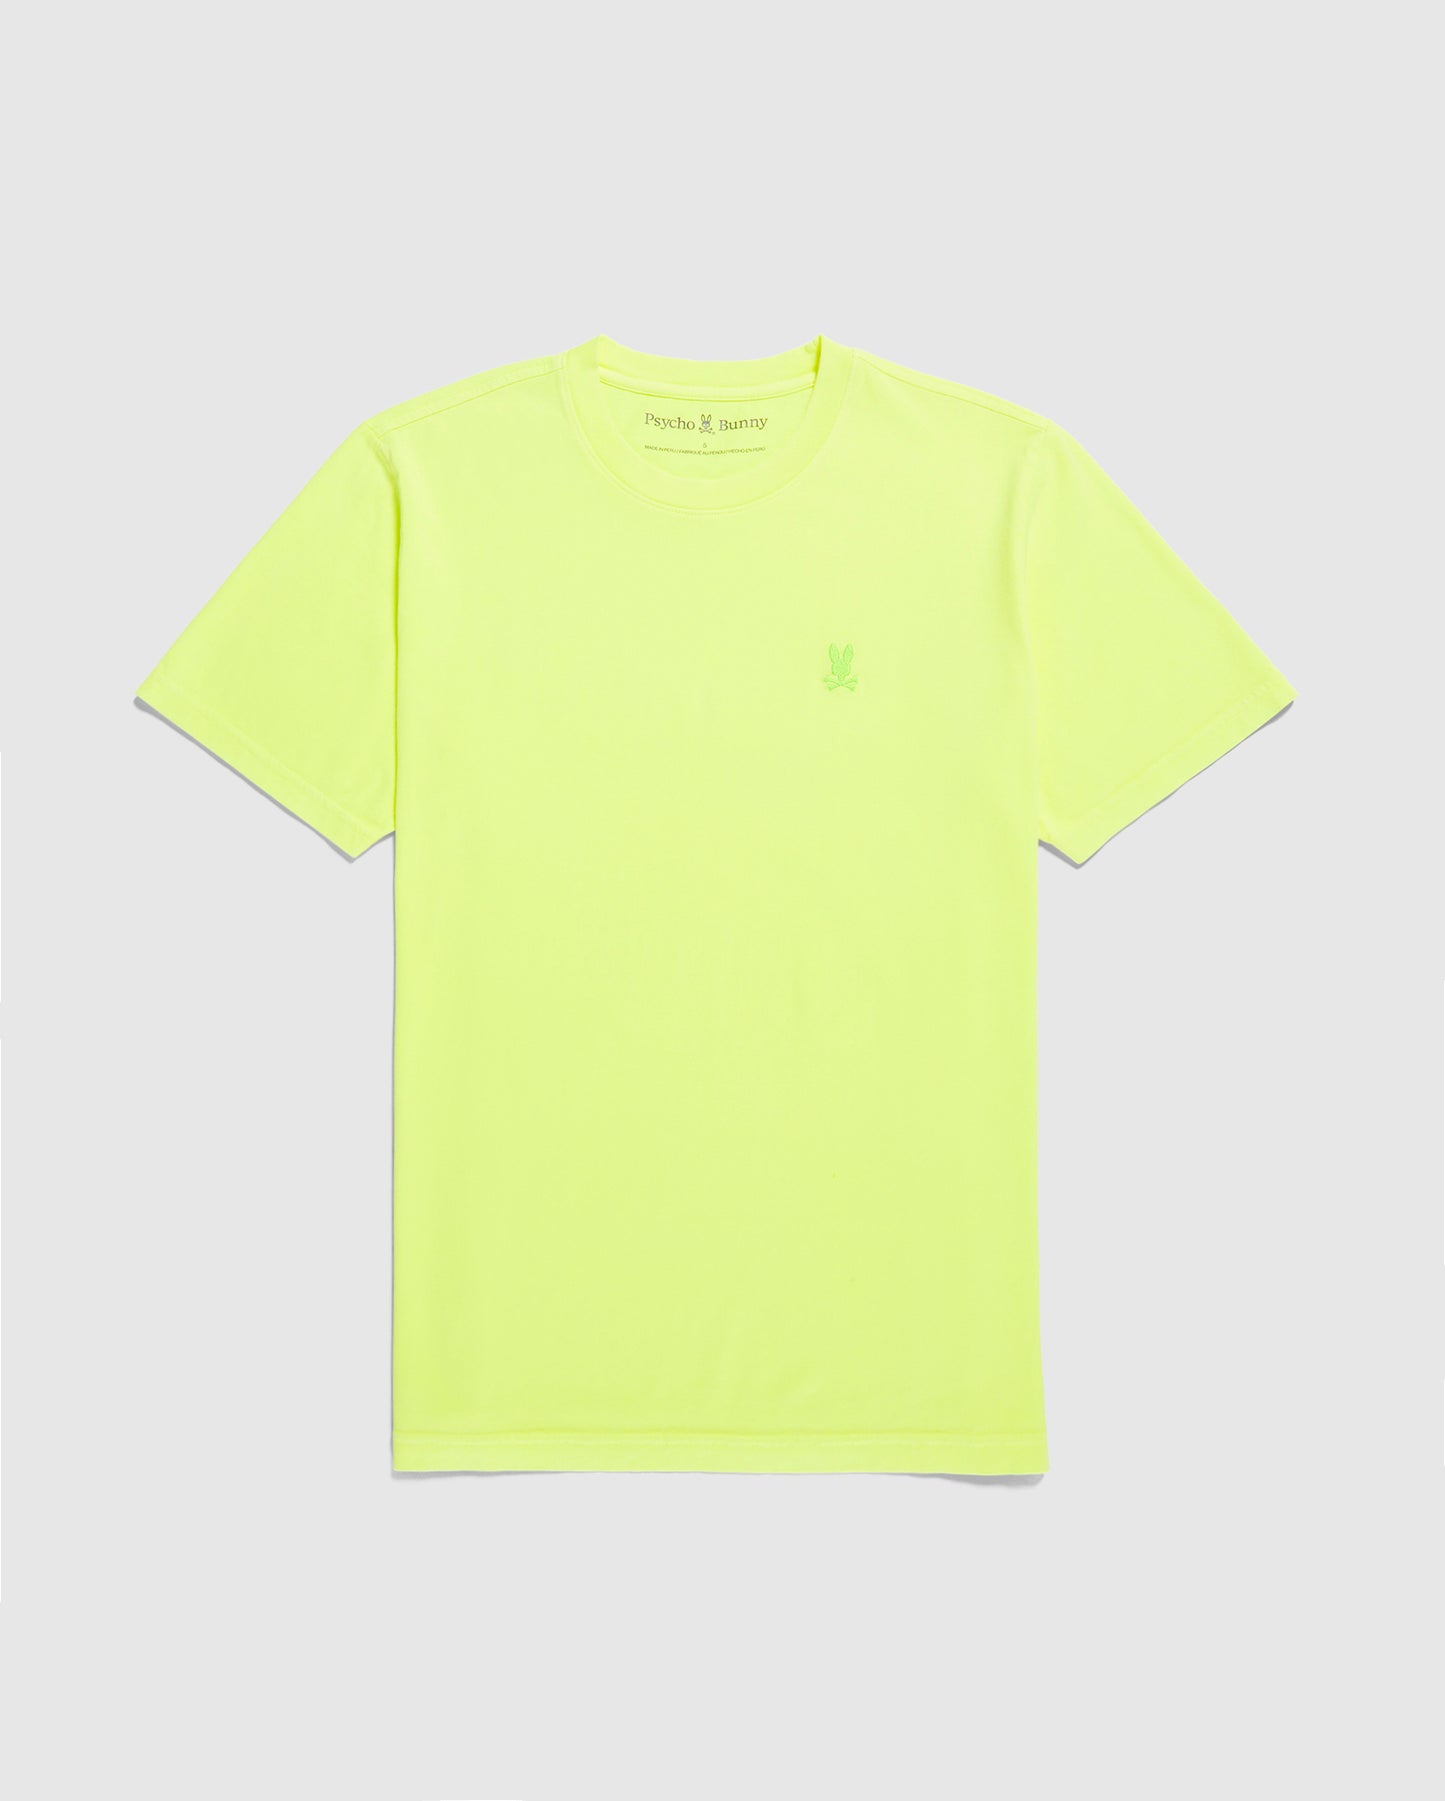 Teddy Fresh Unisex Adult's We're New Here Rainbow T-Shirt RP9 Yellow Medium  NWT